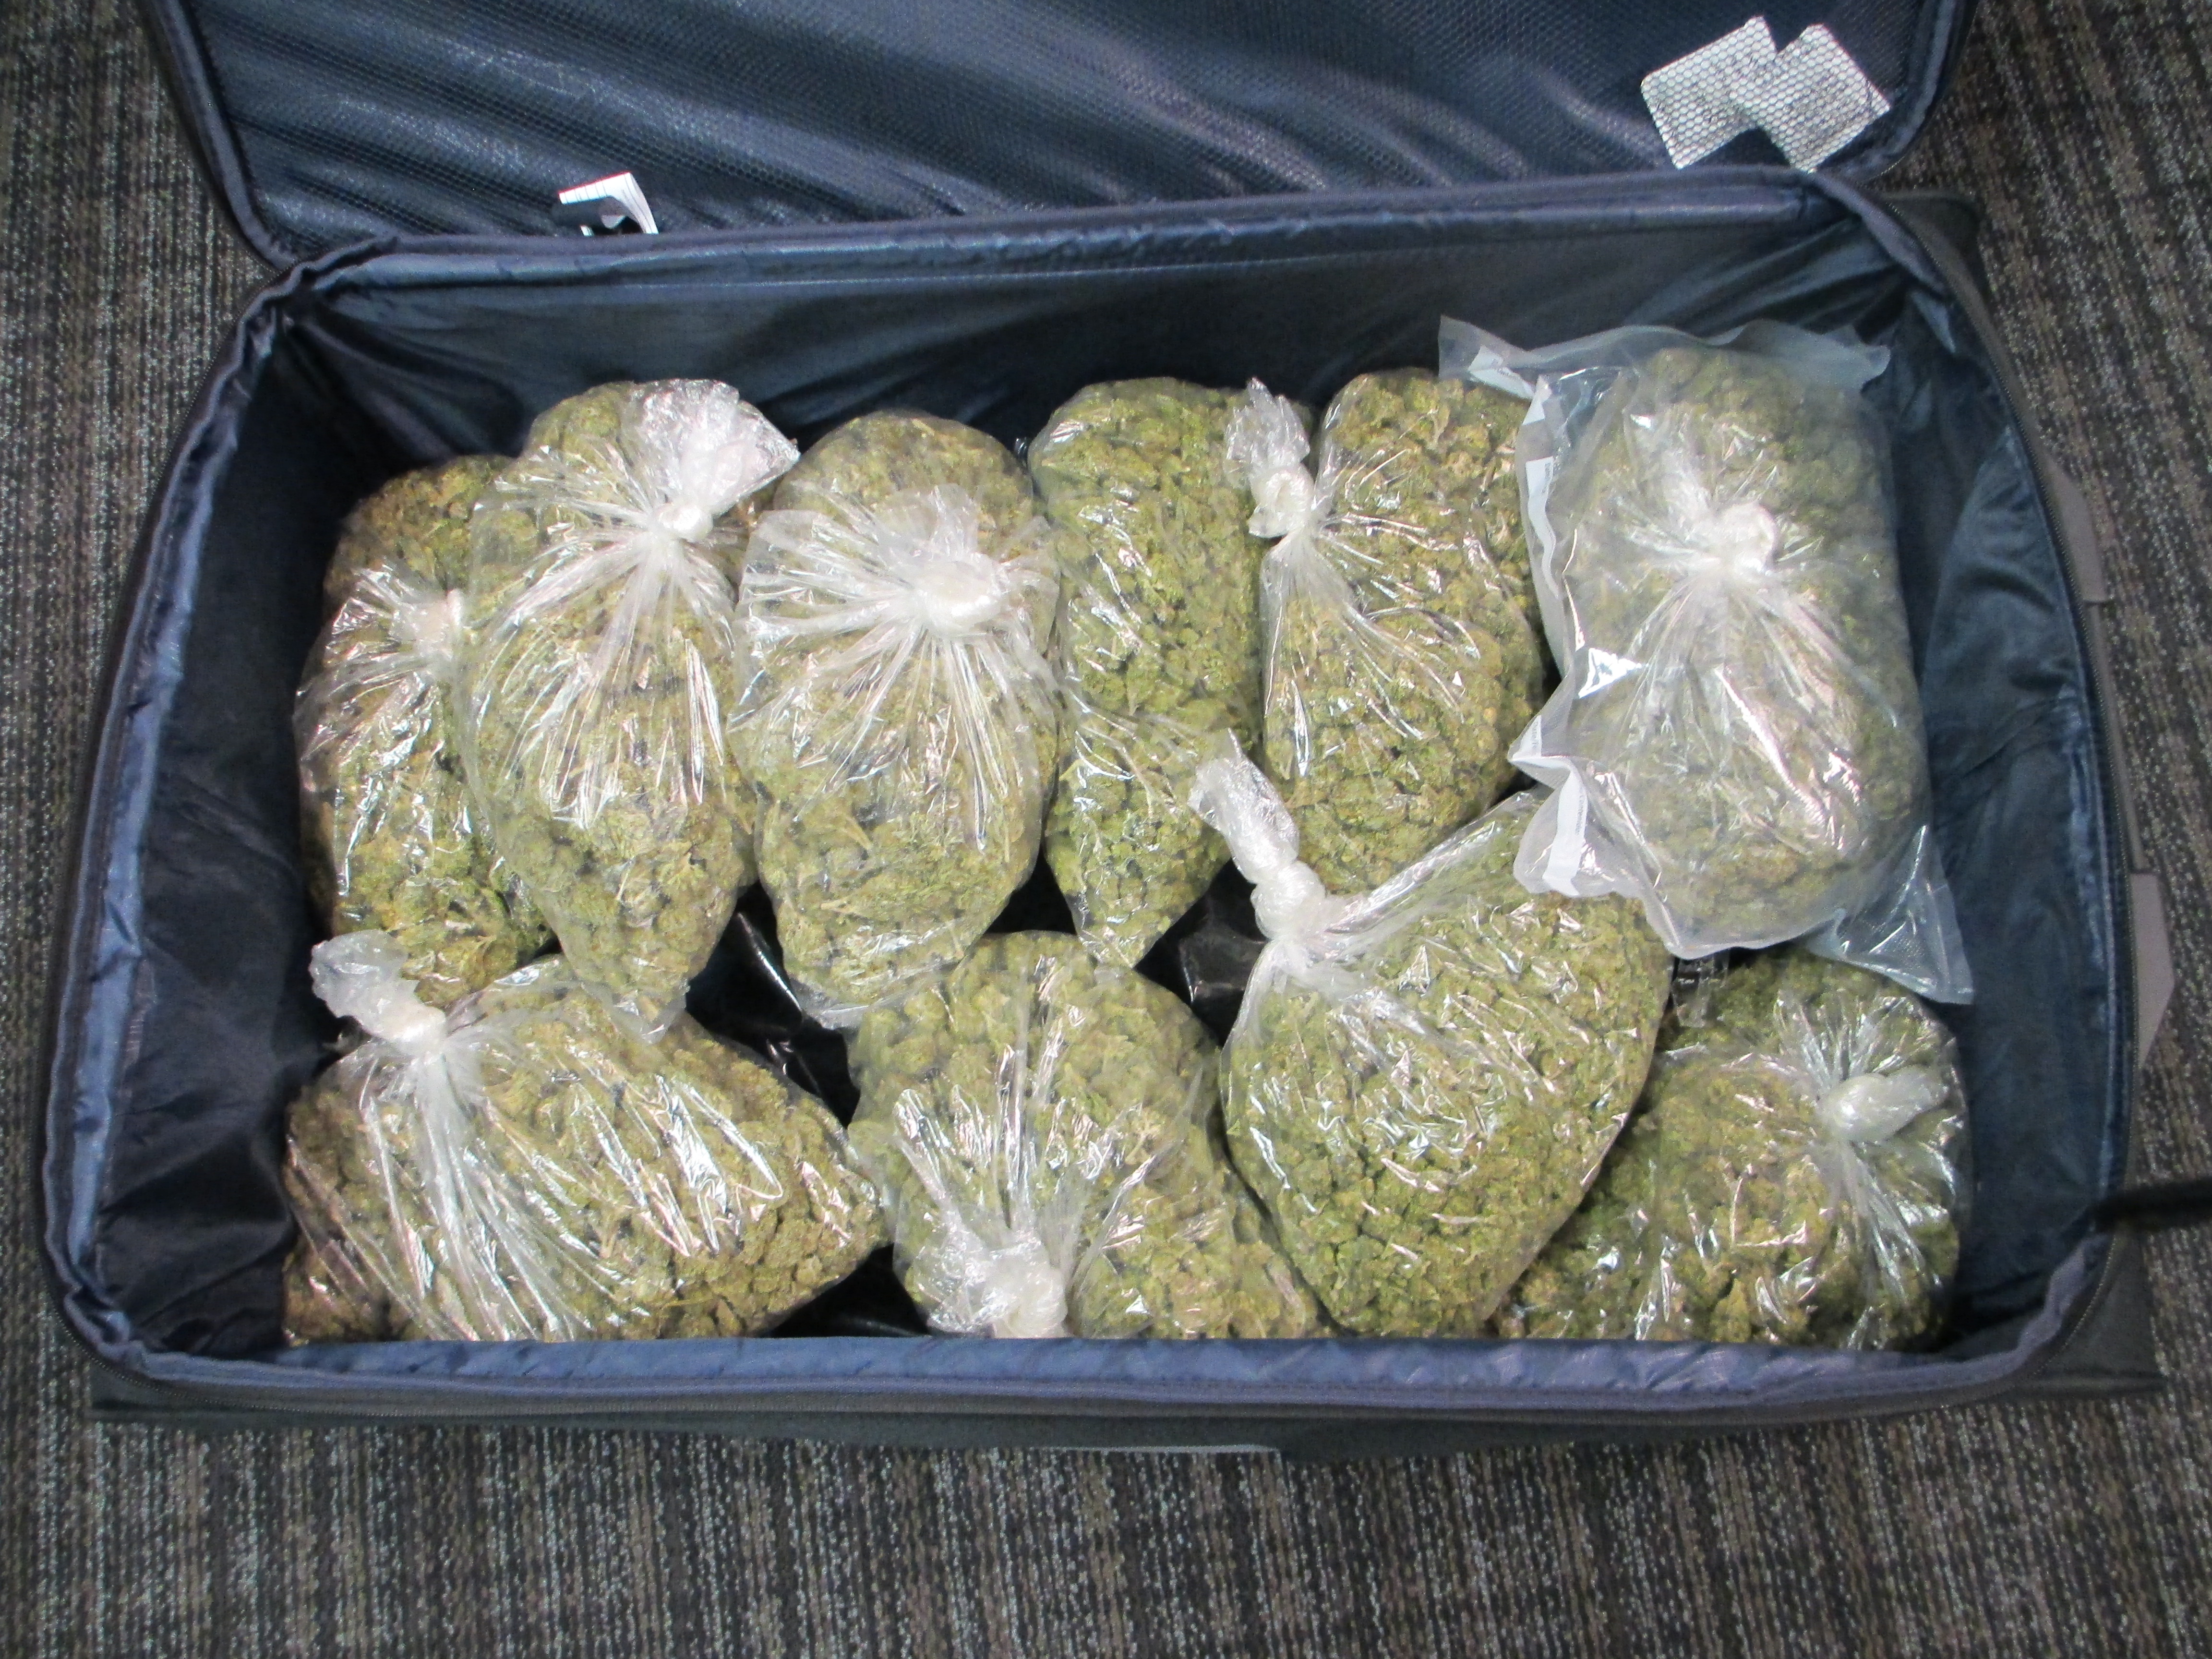 California man arrested with 10 pounds of marijuana in Estero